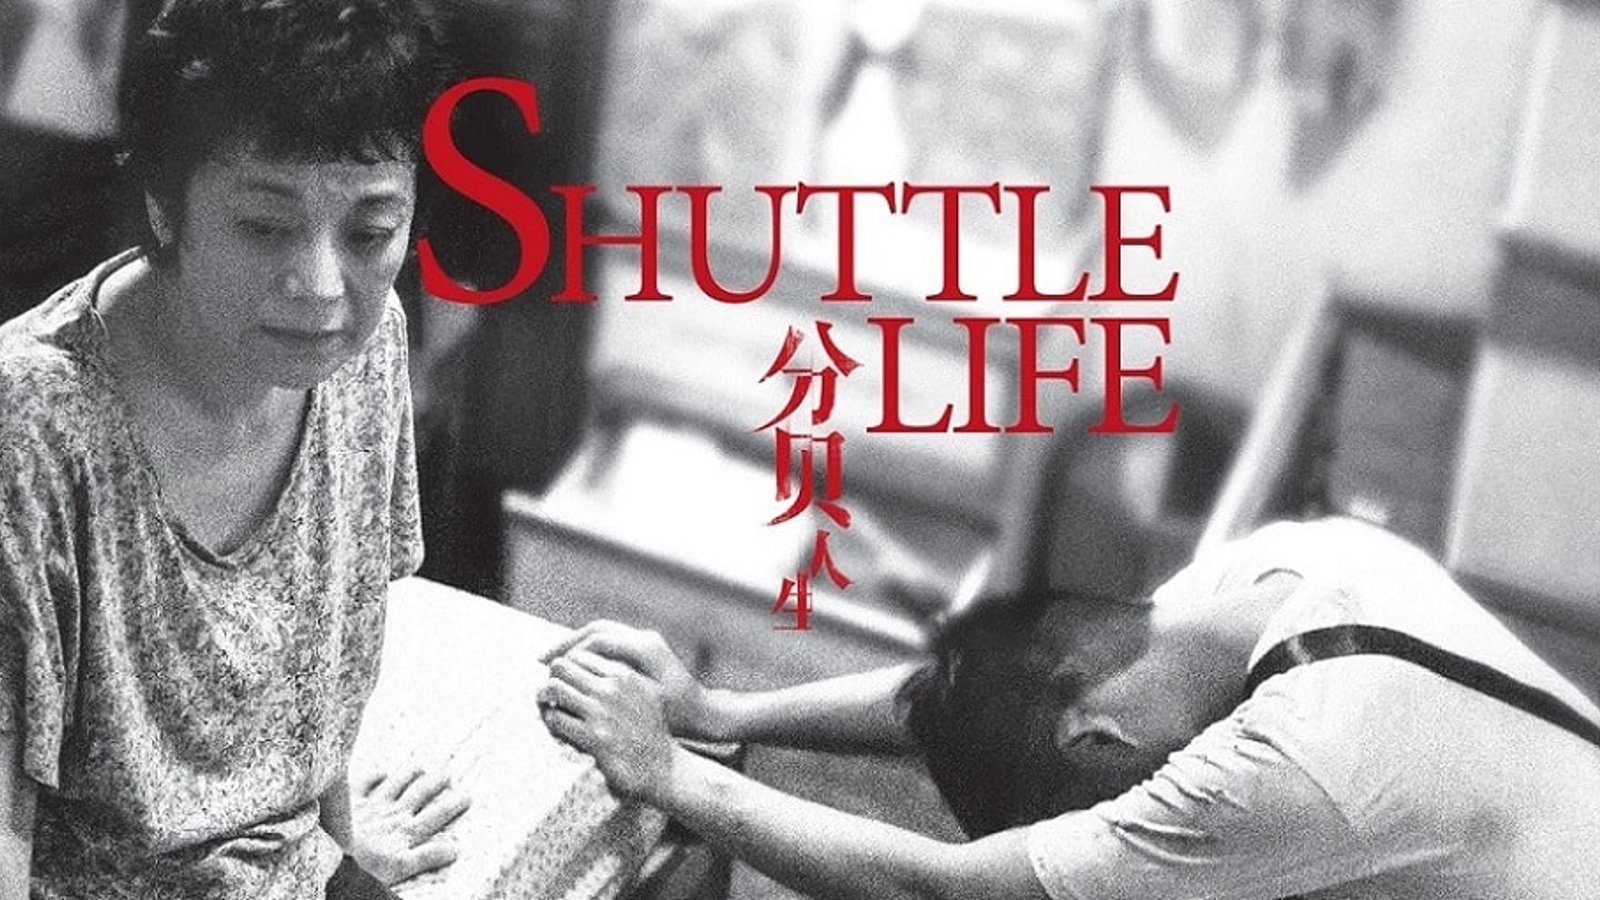 Shuttle Life - Fen bei ren sheng